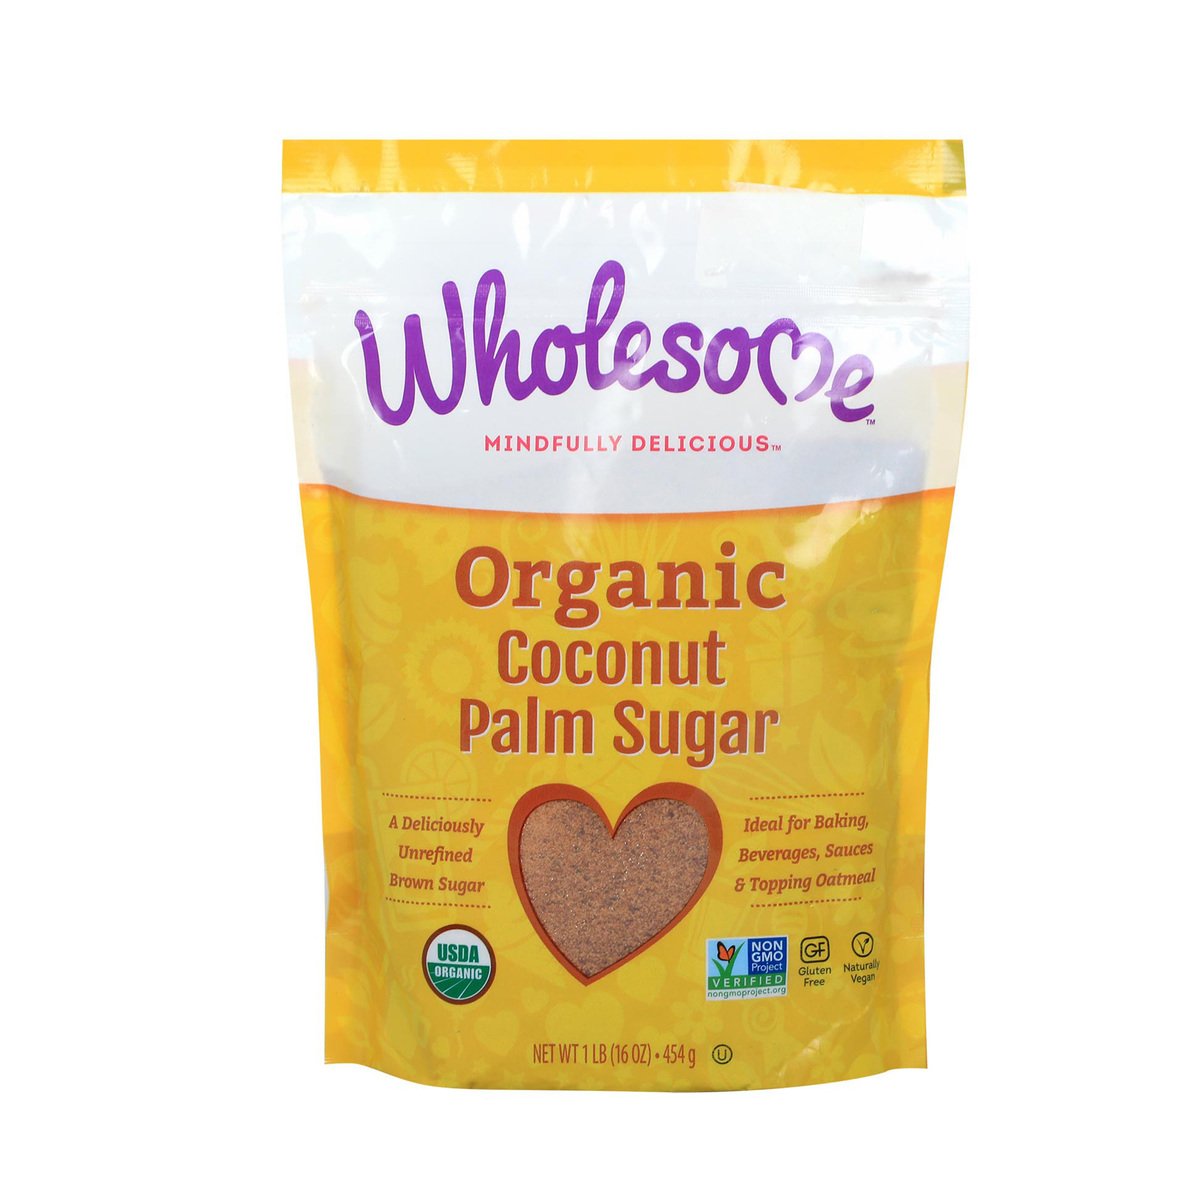 Wholesome Organic Coconut Palm Sugar 454g